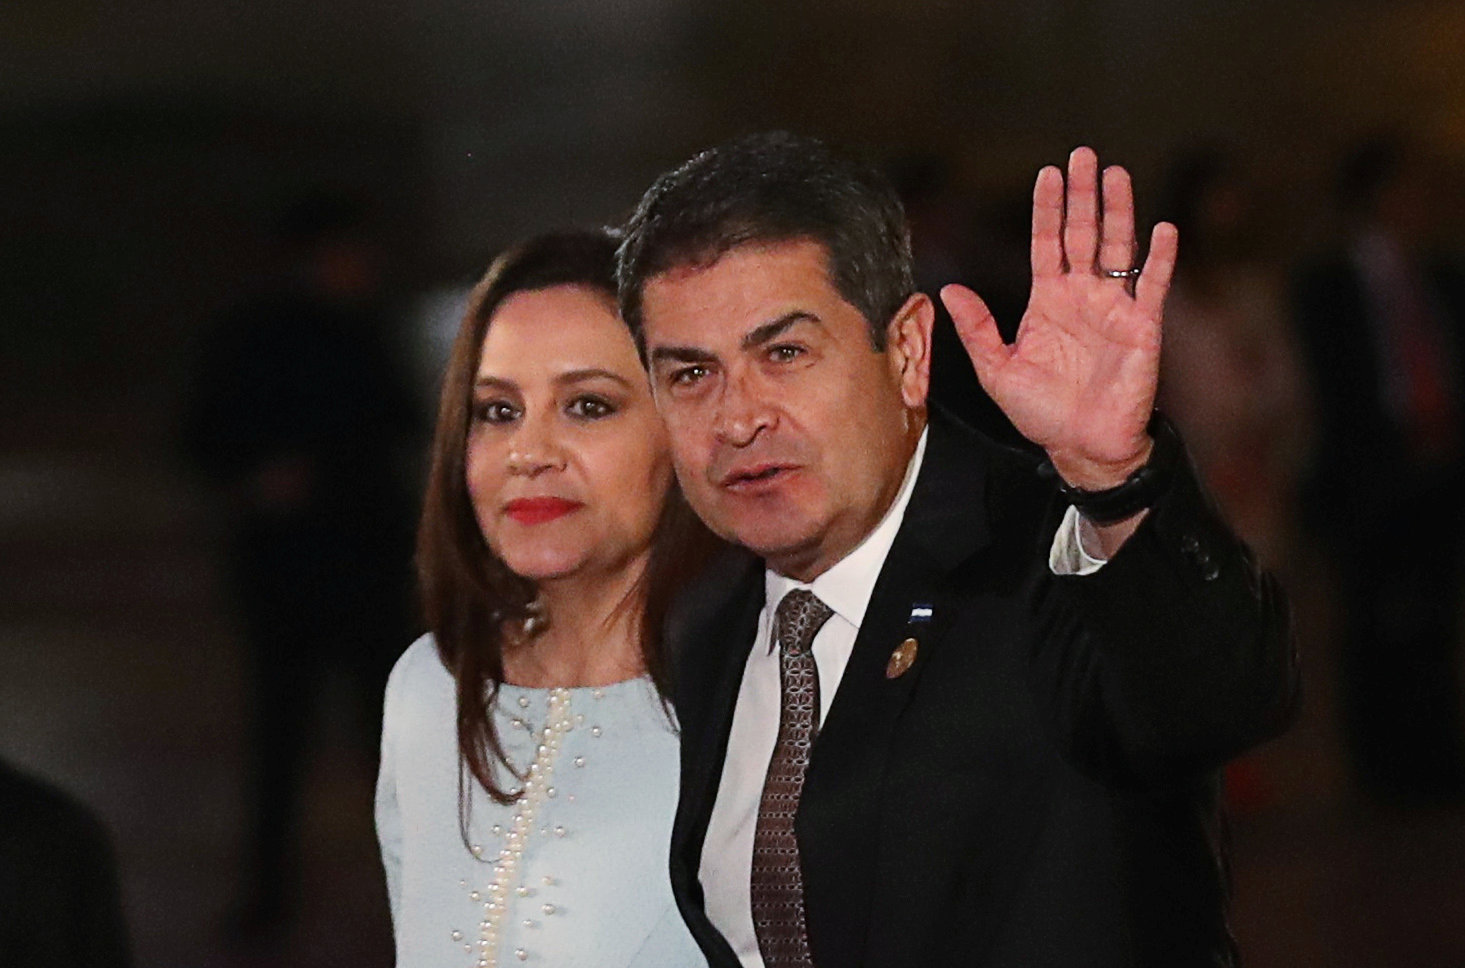 ¿Qué le espera al expresidente de Honduras, Juan Orlando Hernández?